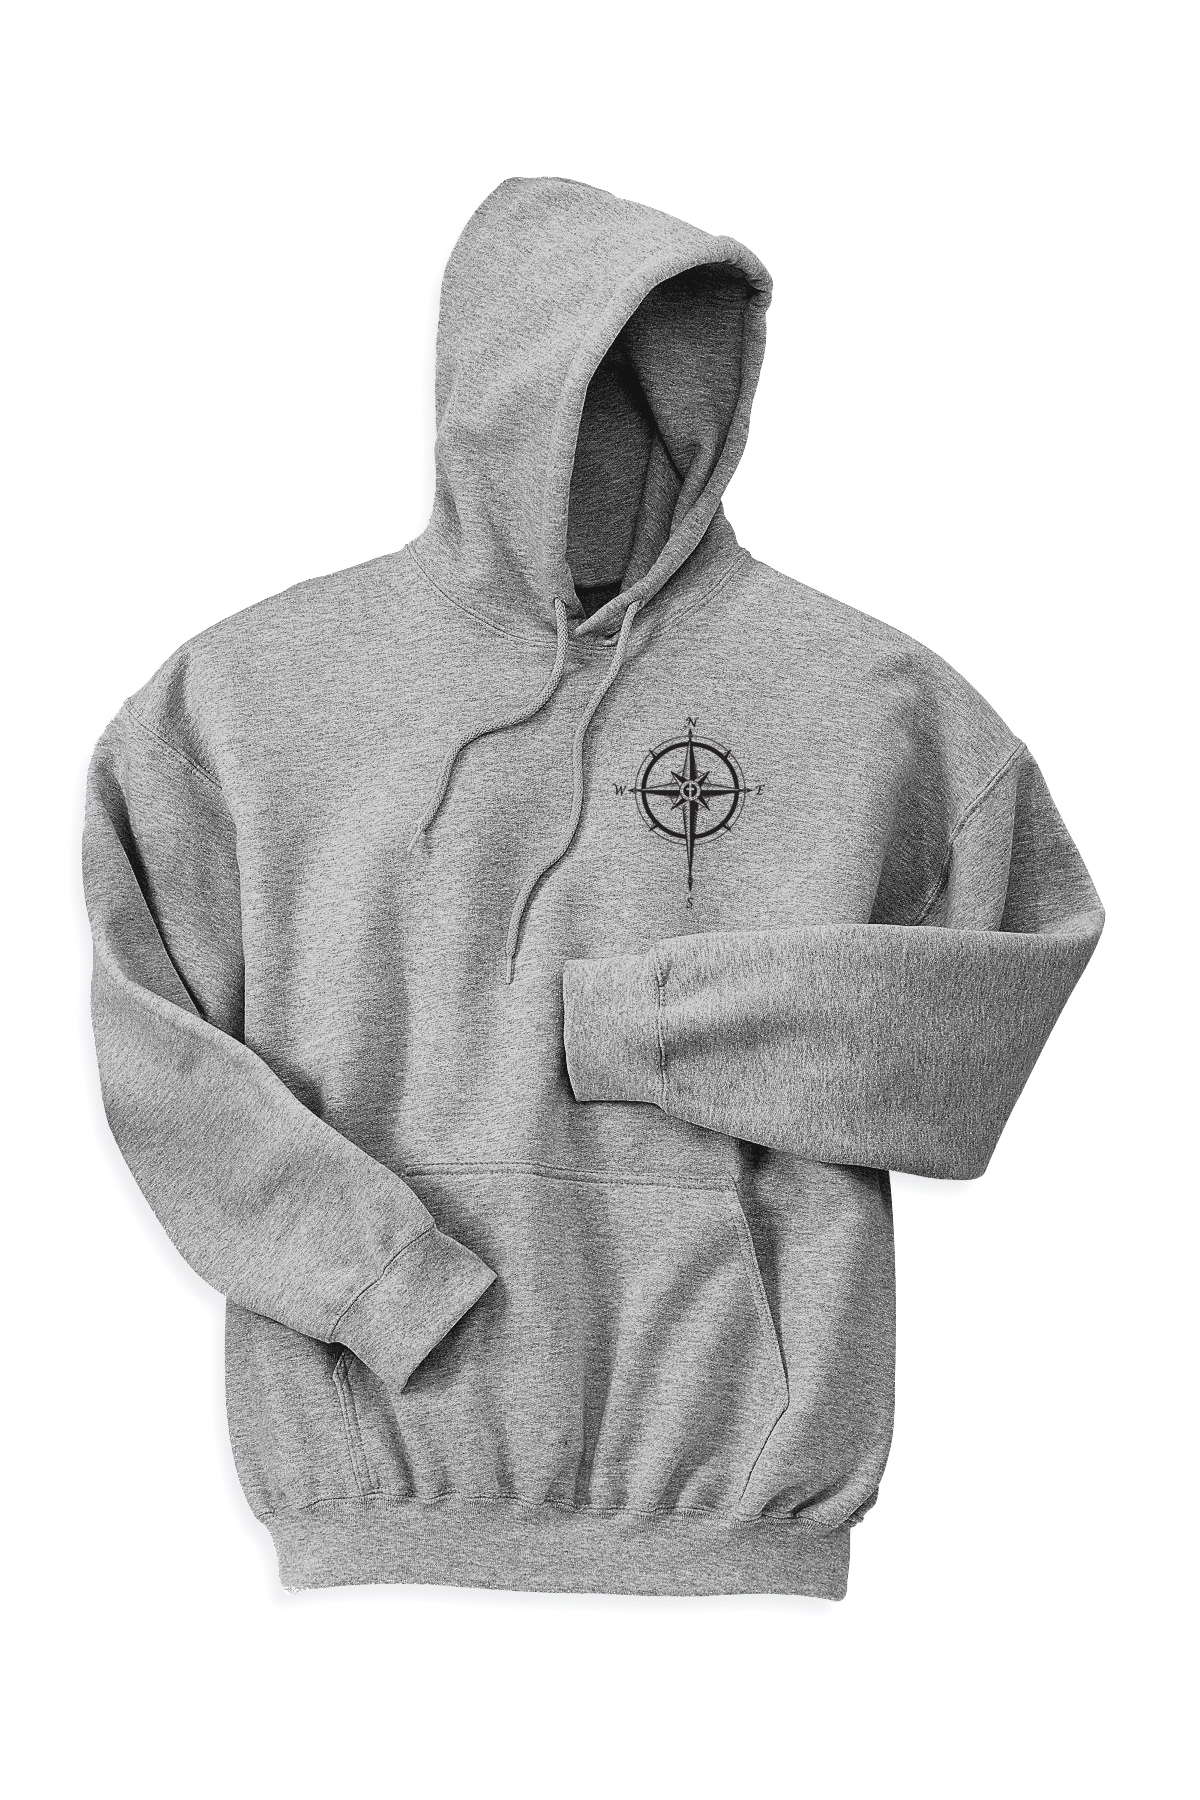 Pathfinder Compass Cross Psalm 25:4 Hooded Sweatshirt - Sport Grey